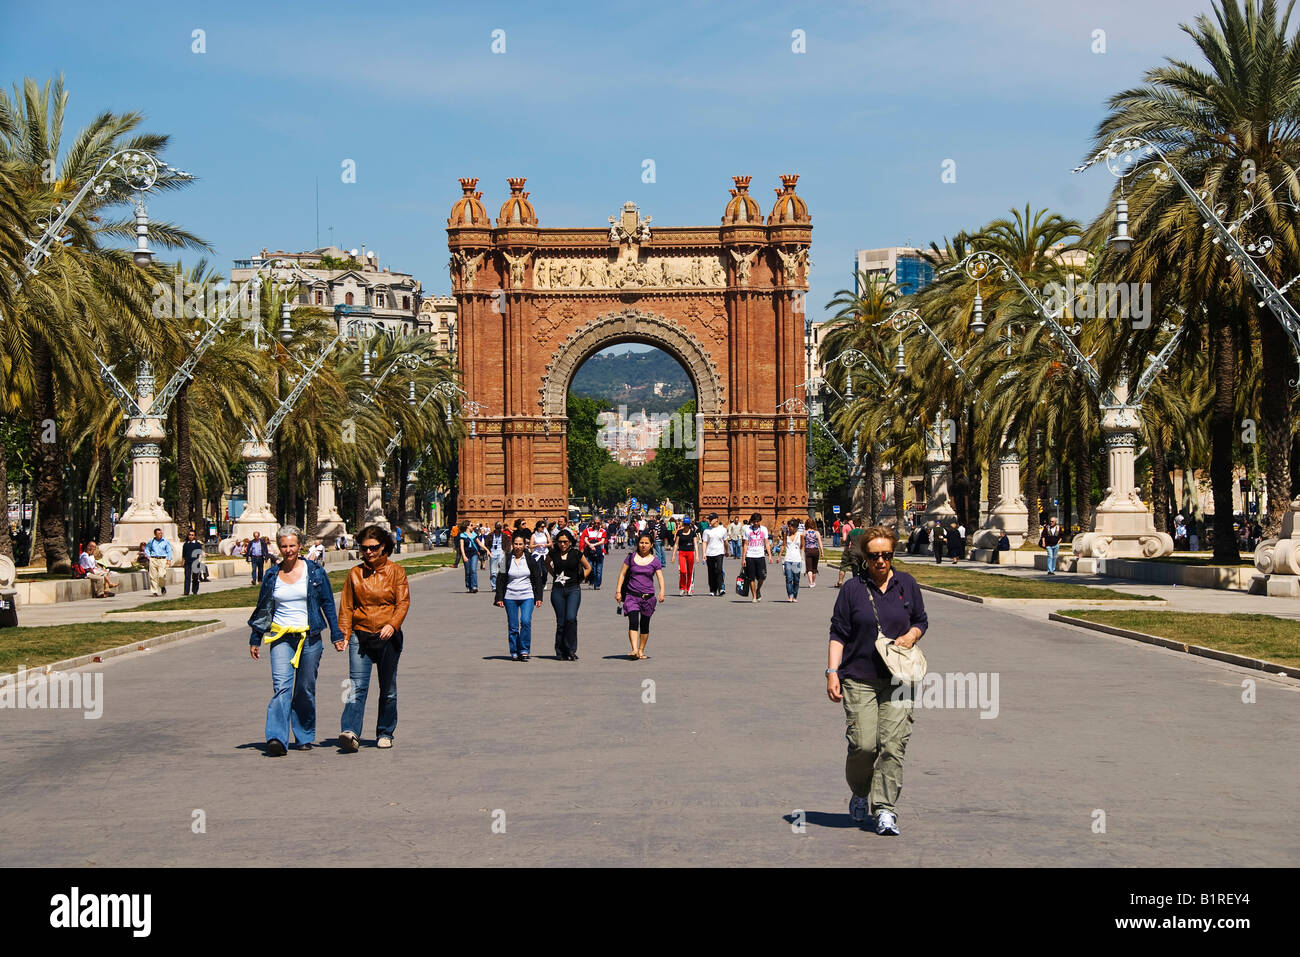 Arc de Triomf, triumphal arch, Barcelona, Spain, Europe Stock Photo